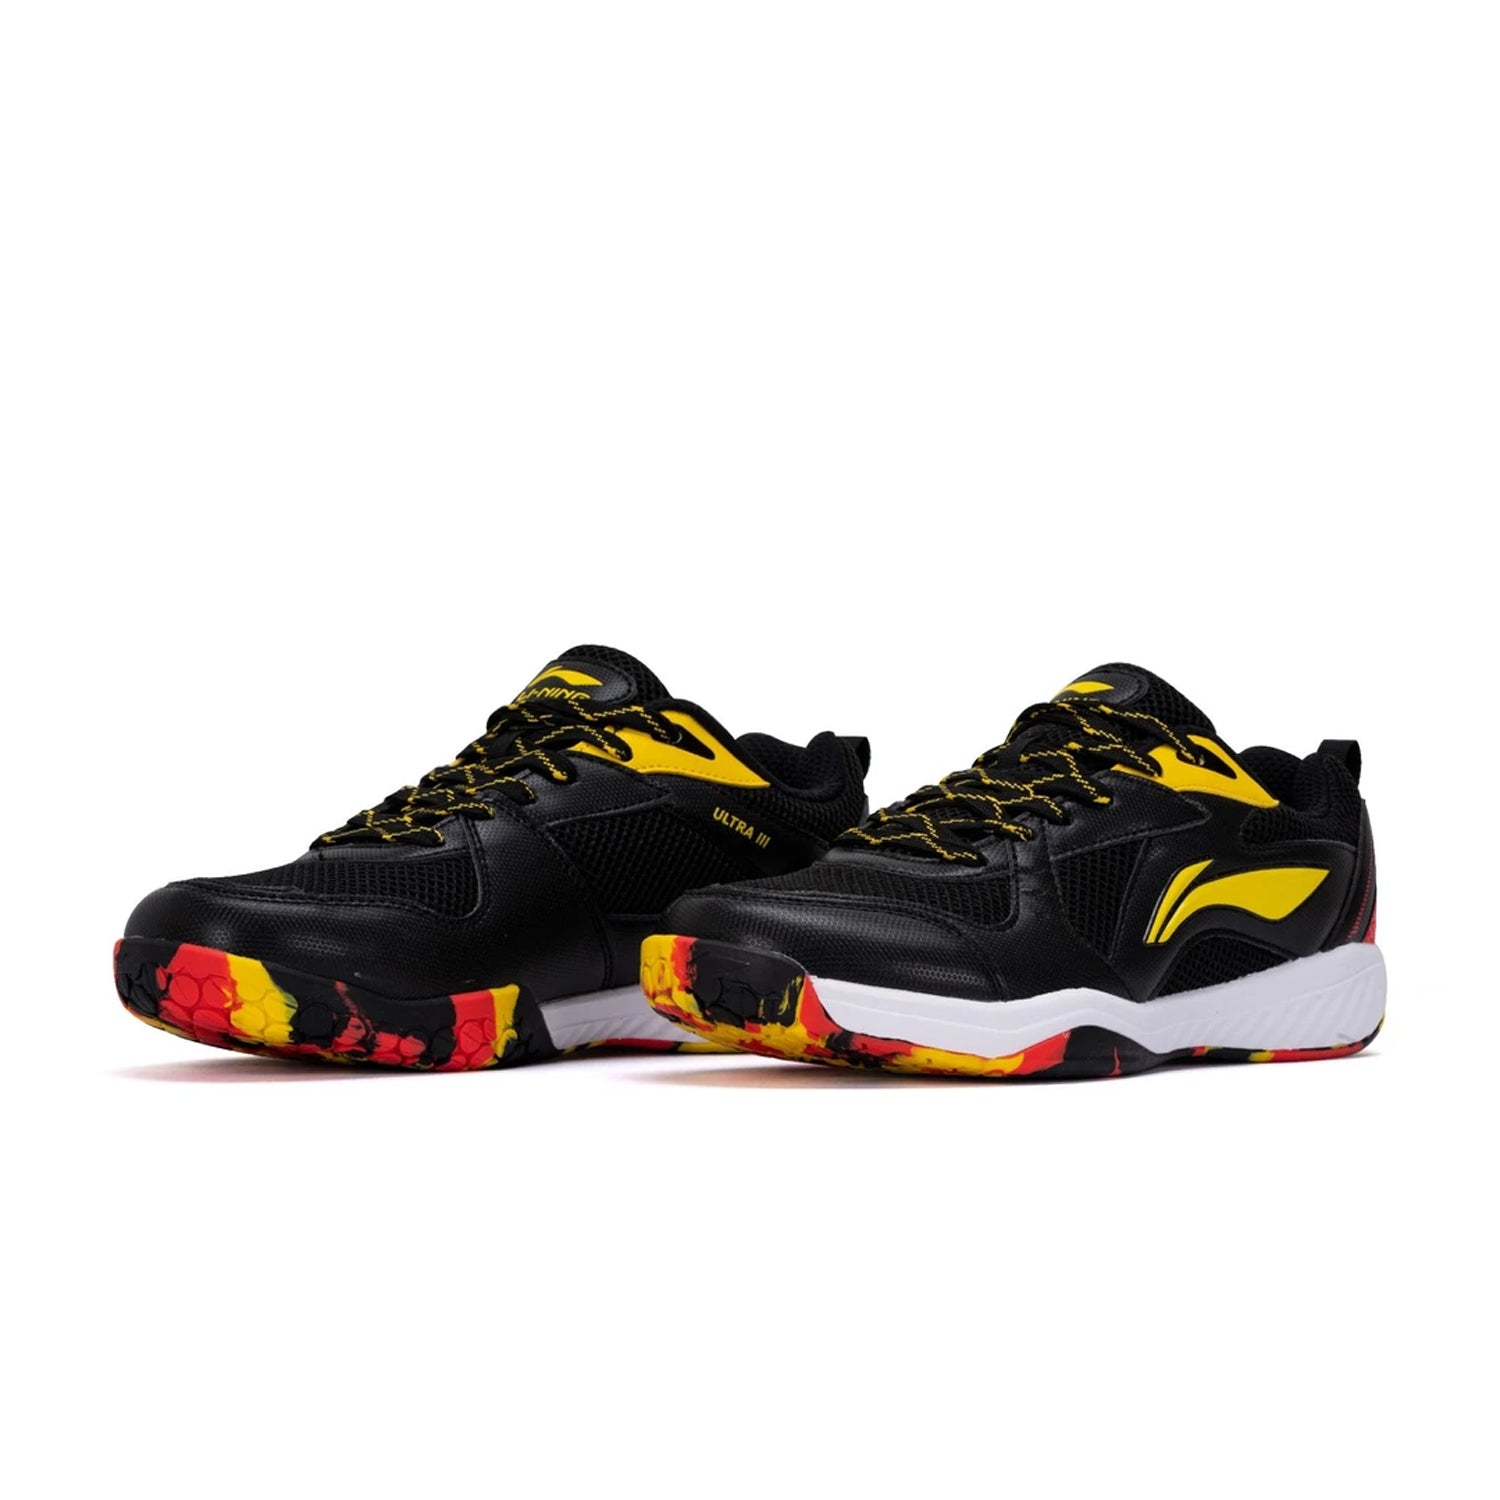 Li-Ning Ultra III Non Marking Badminton Shoe, Black/Yellow/Red